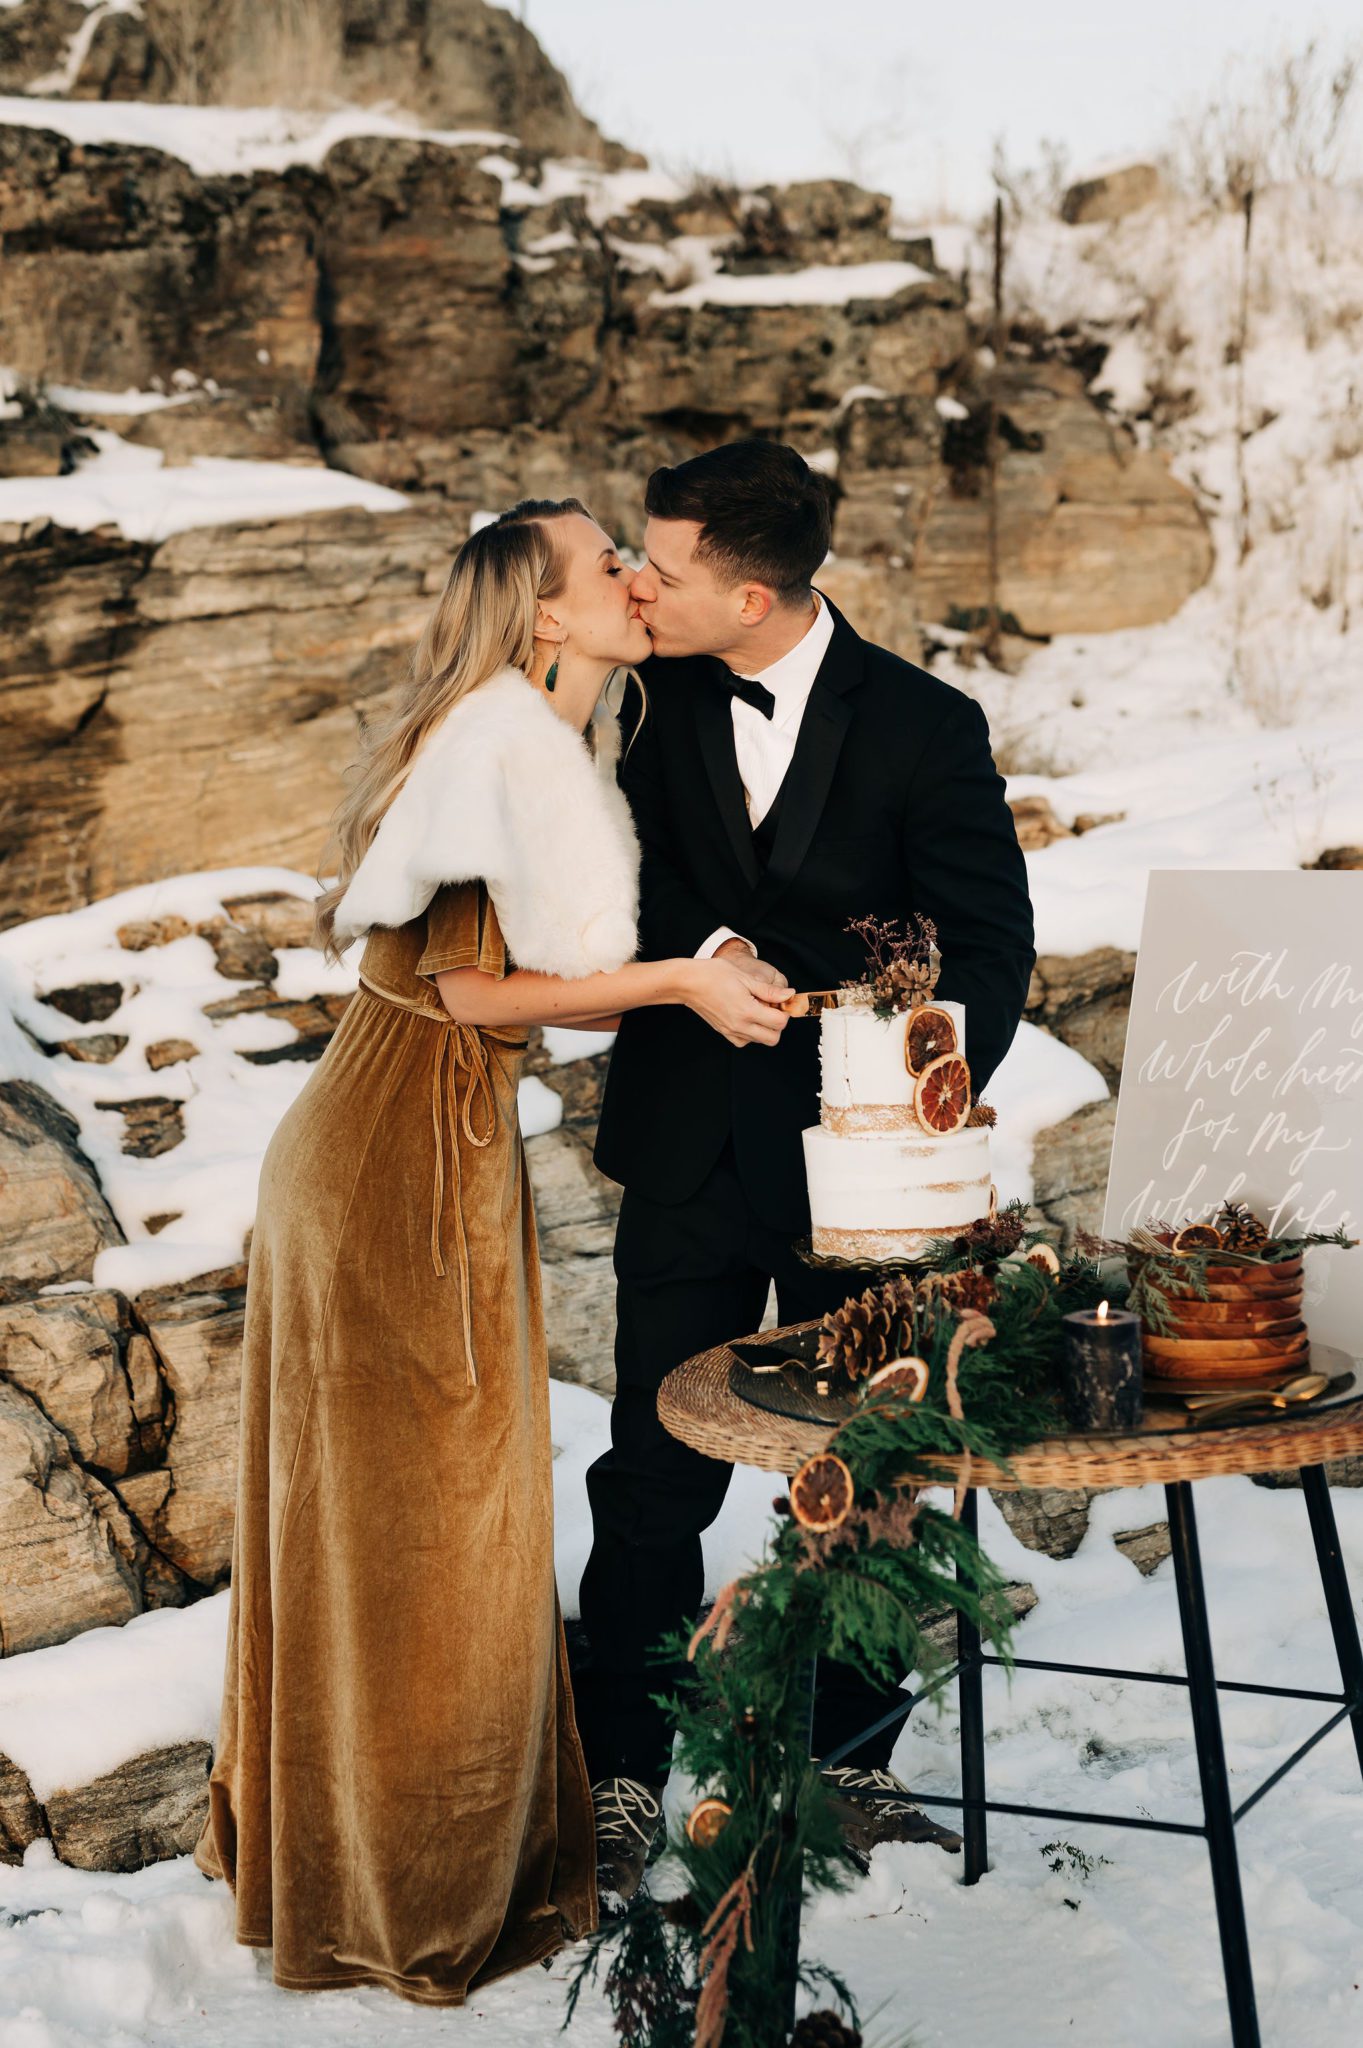 Outdoor winter elopement cake cutting, naked cake wedding inspiration